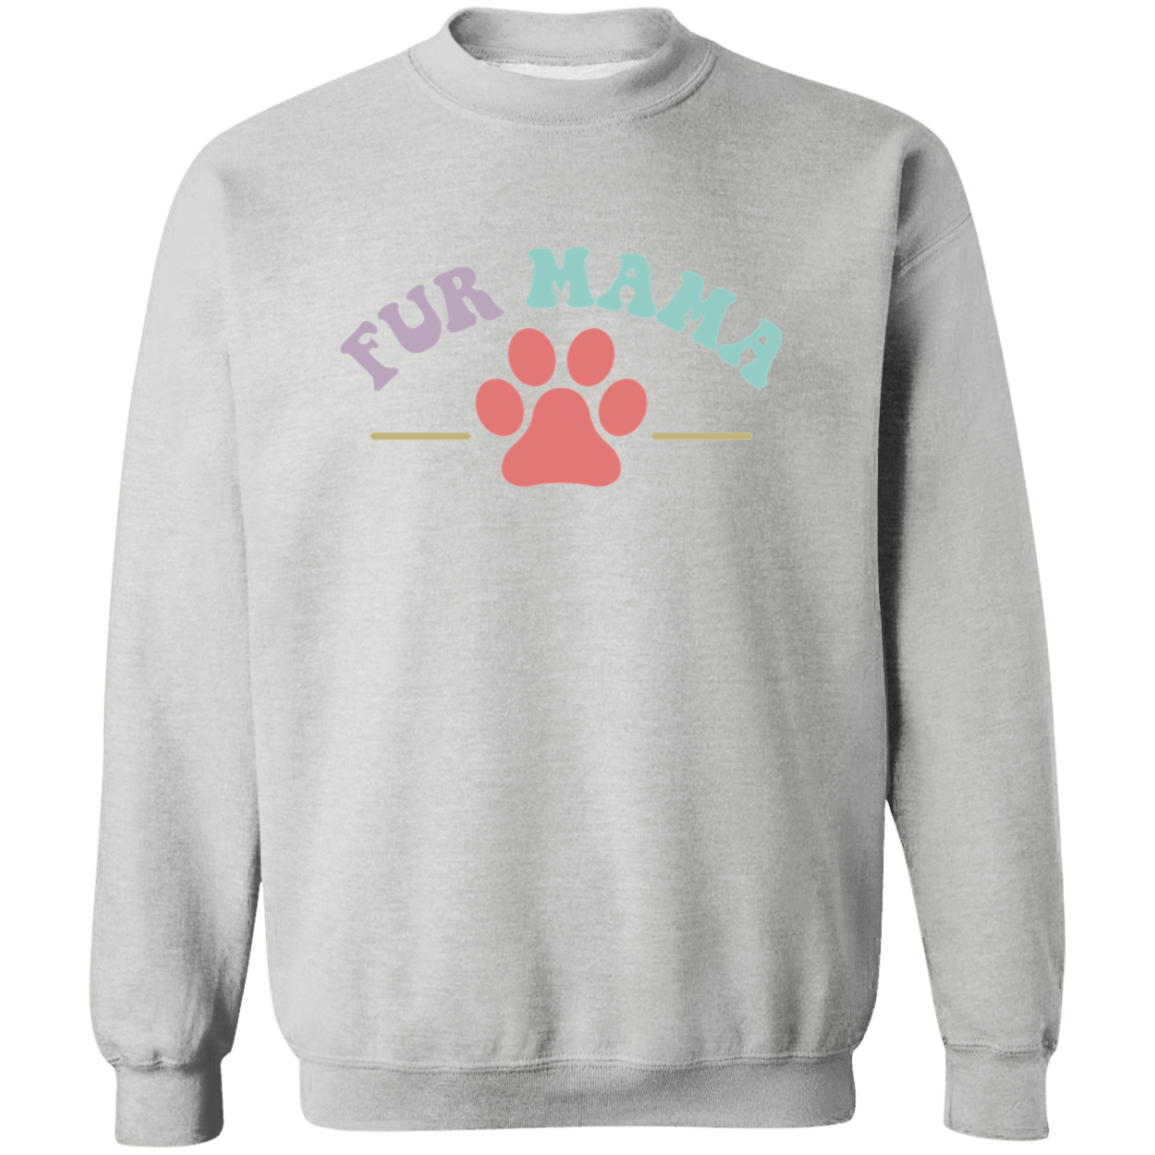 Fur Mama Paw Print Dog Rescue Crewneck Pullover Sweatshirt